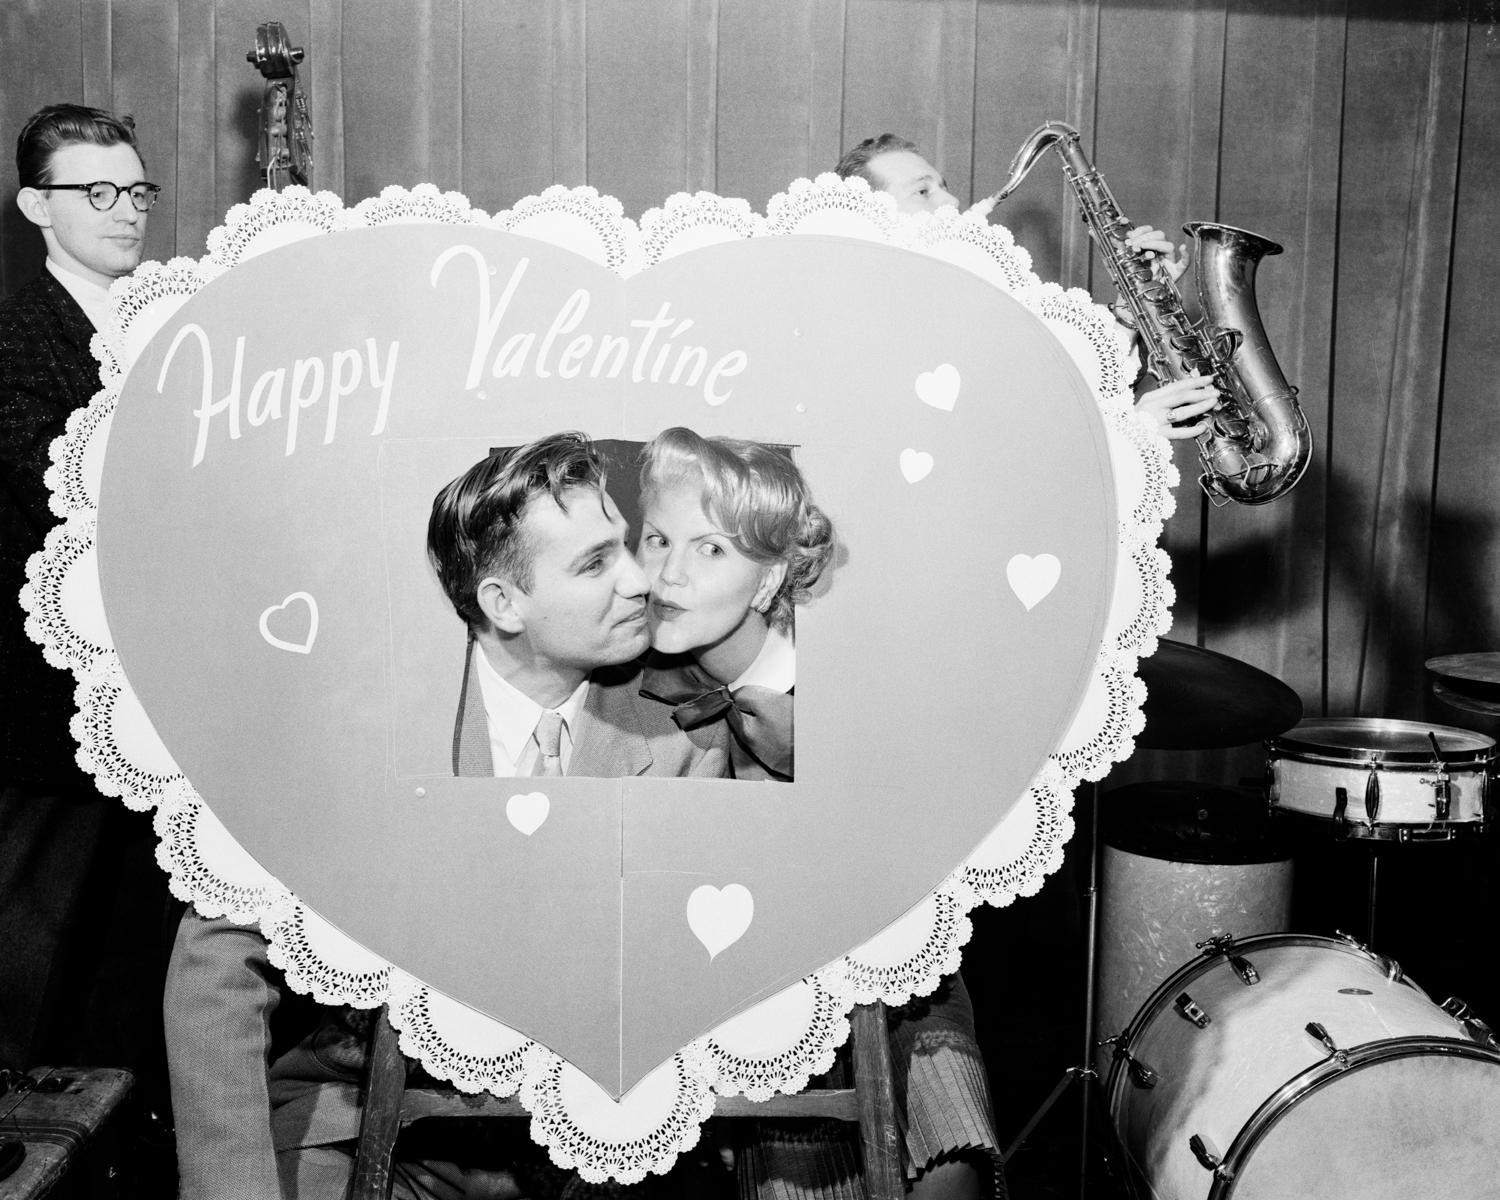 Jennifer Greenburg Black and White Photograph - I did not have a happy Valentine